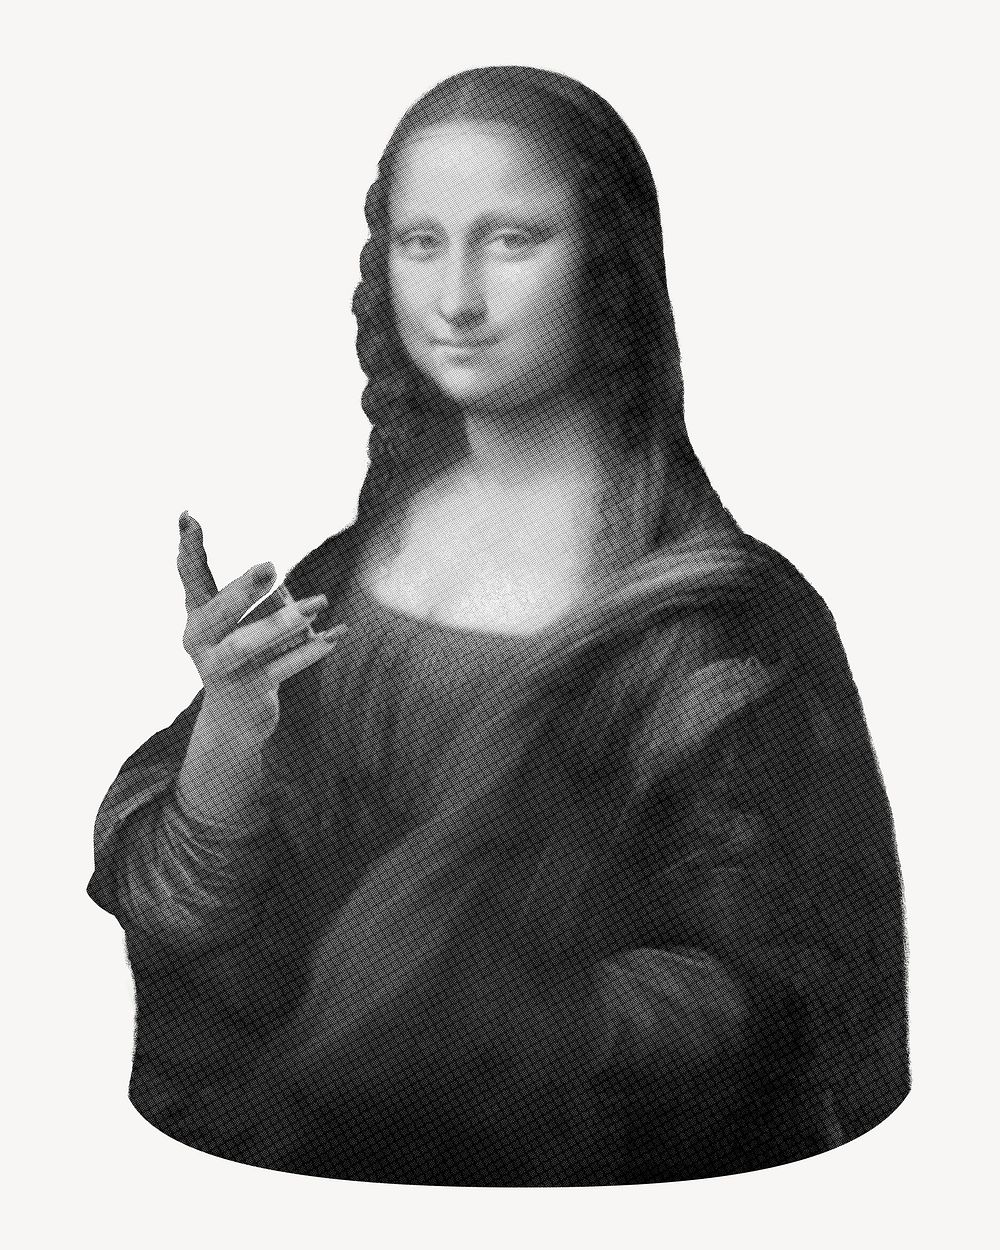 Mona Lisa in greyscale, Da Vinci's famous artwork, remixed by rawpixel psd